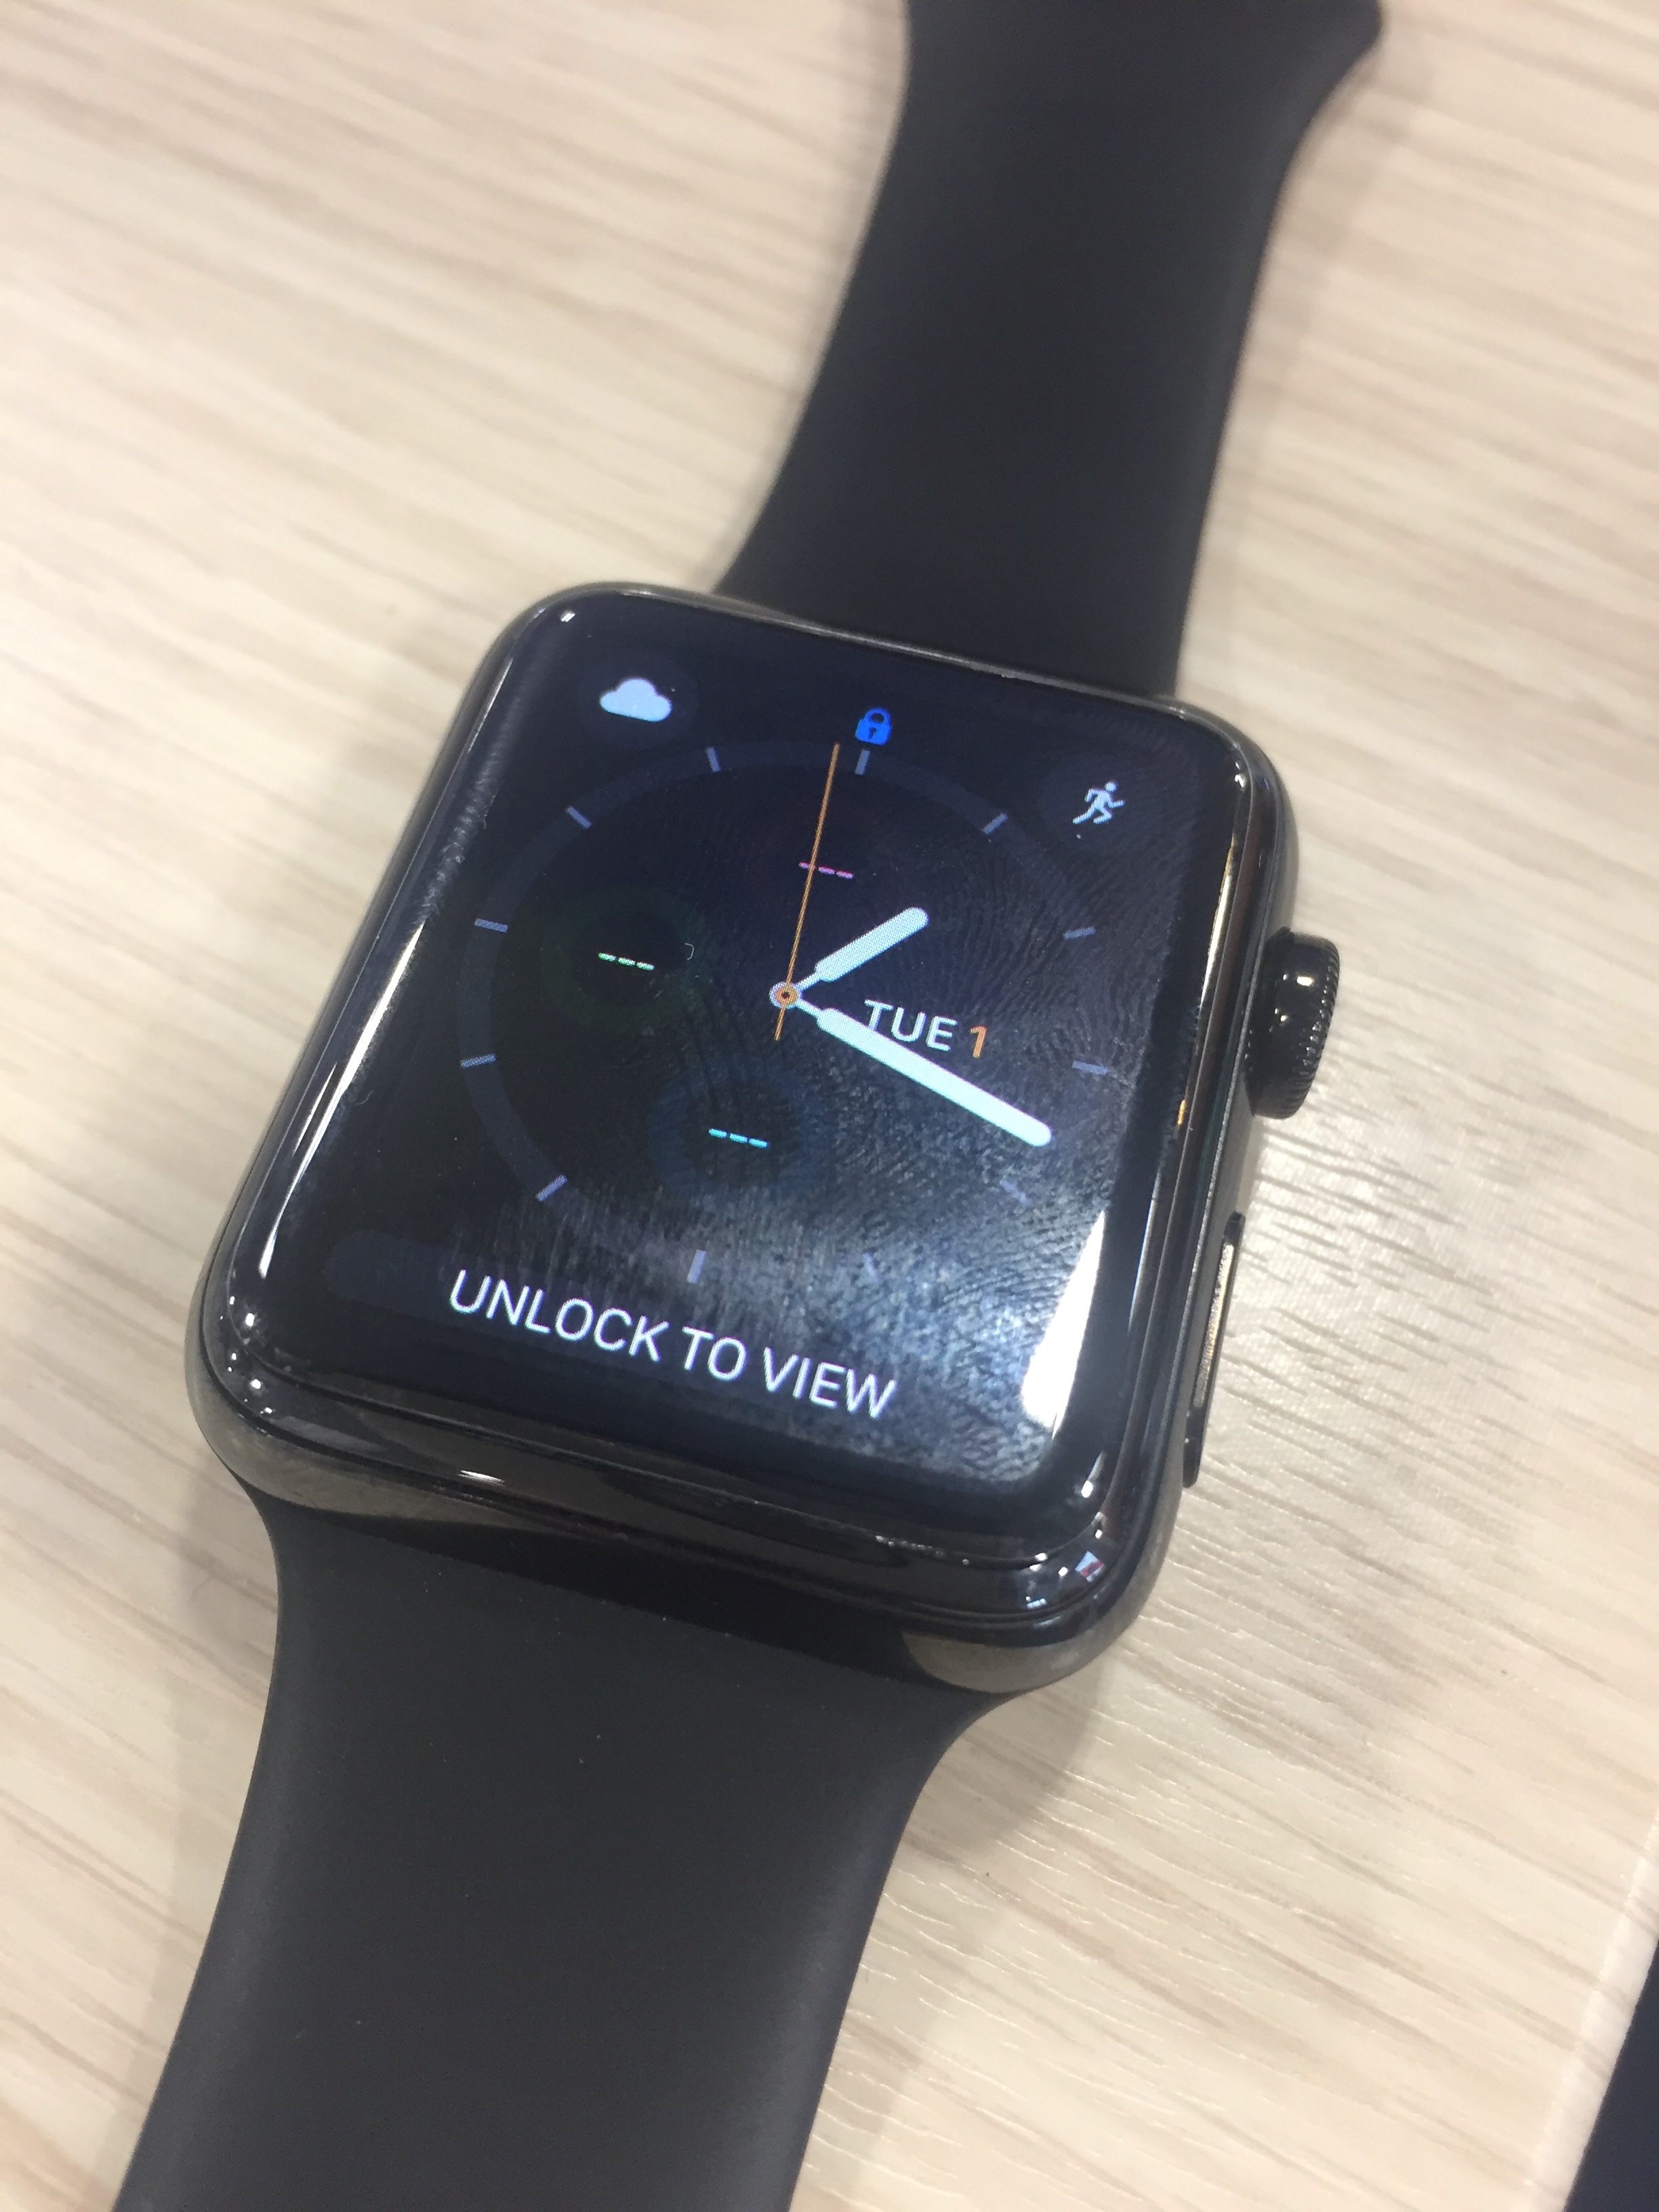 Watch screen off - Apple Community